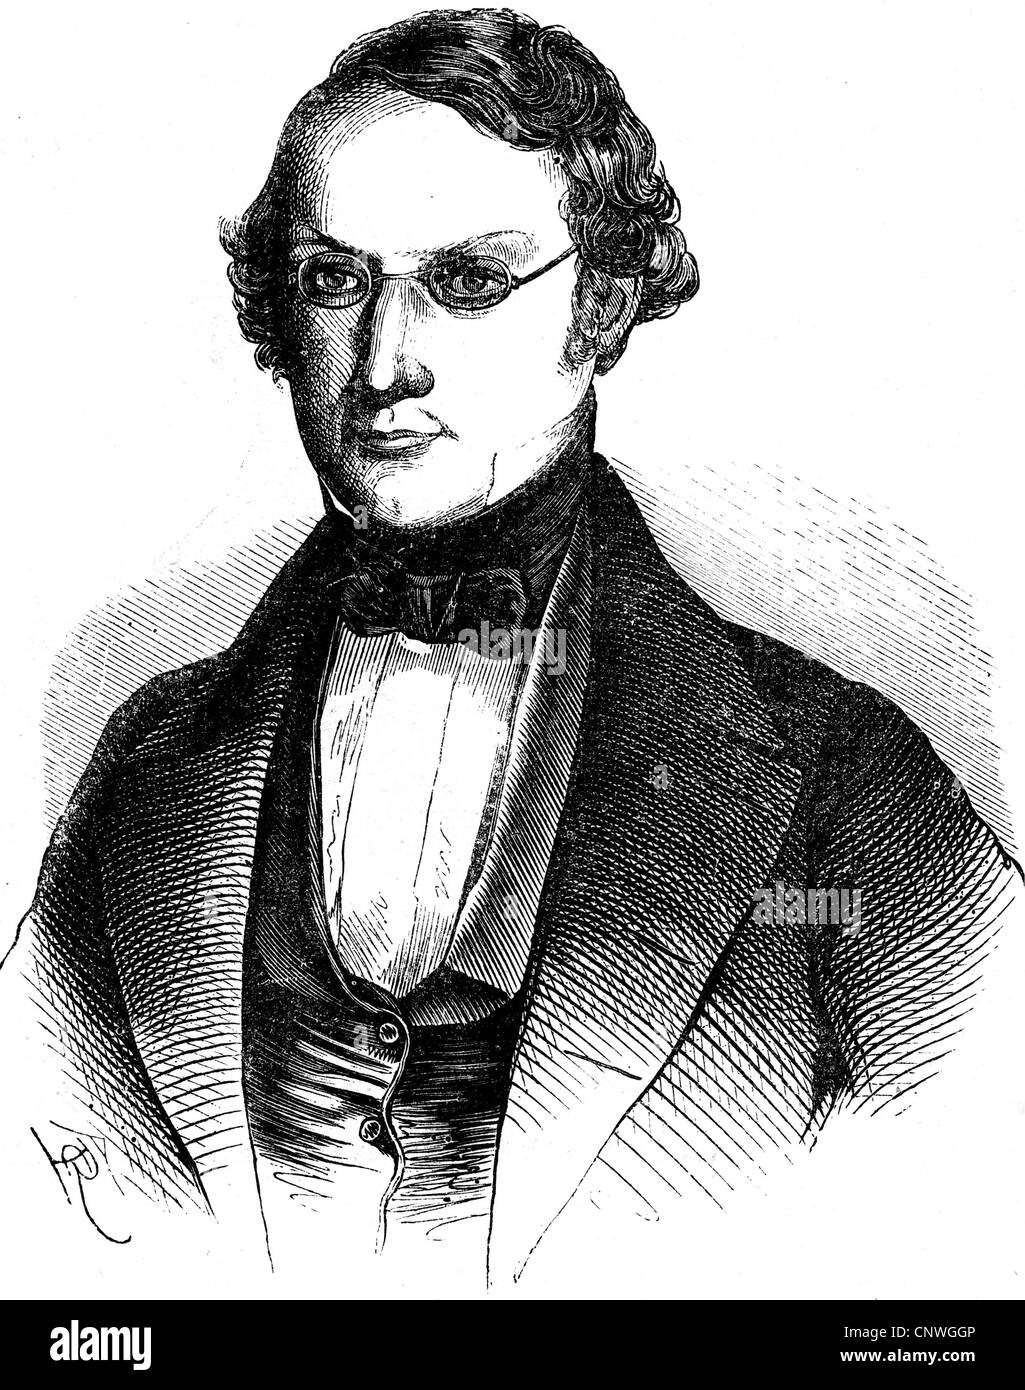 Zittel, Karl, 21.6.1802 - 29.8 1871, German theologian, politician, wood engraving, circa 1848, Stock Photo